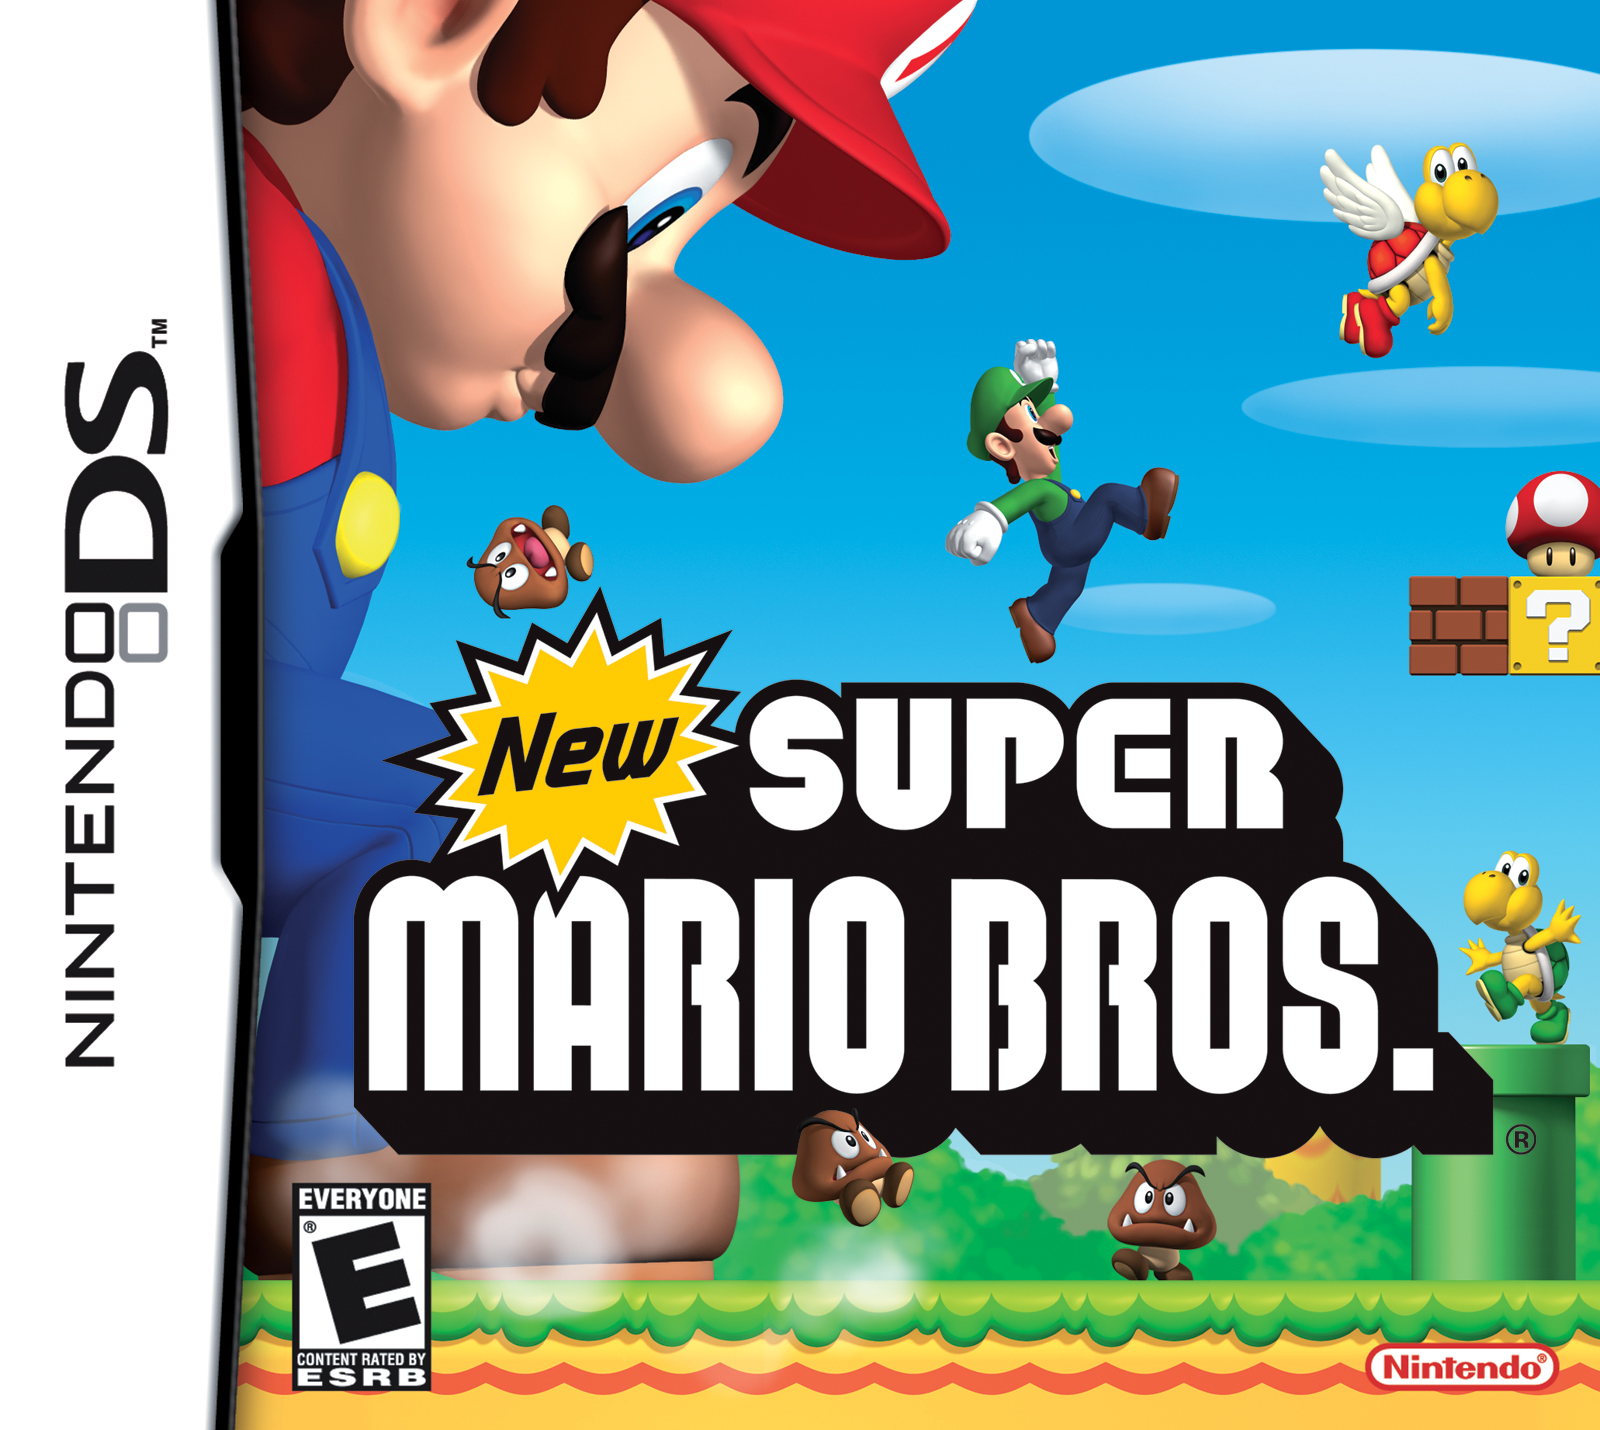 World 8-1 (Super Mario Bros.) - Super Mario Wiki, the Mario